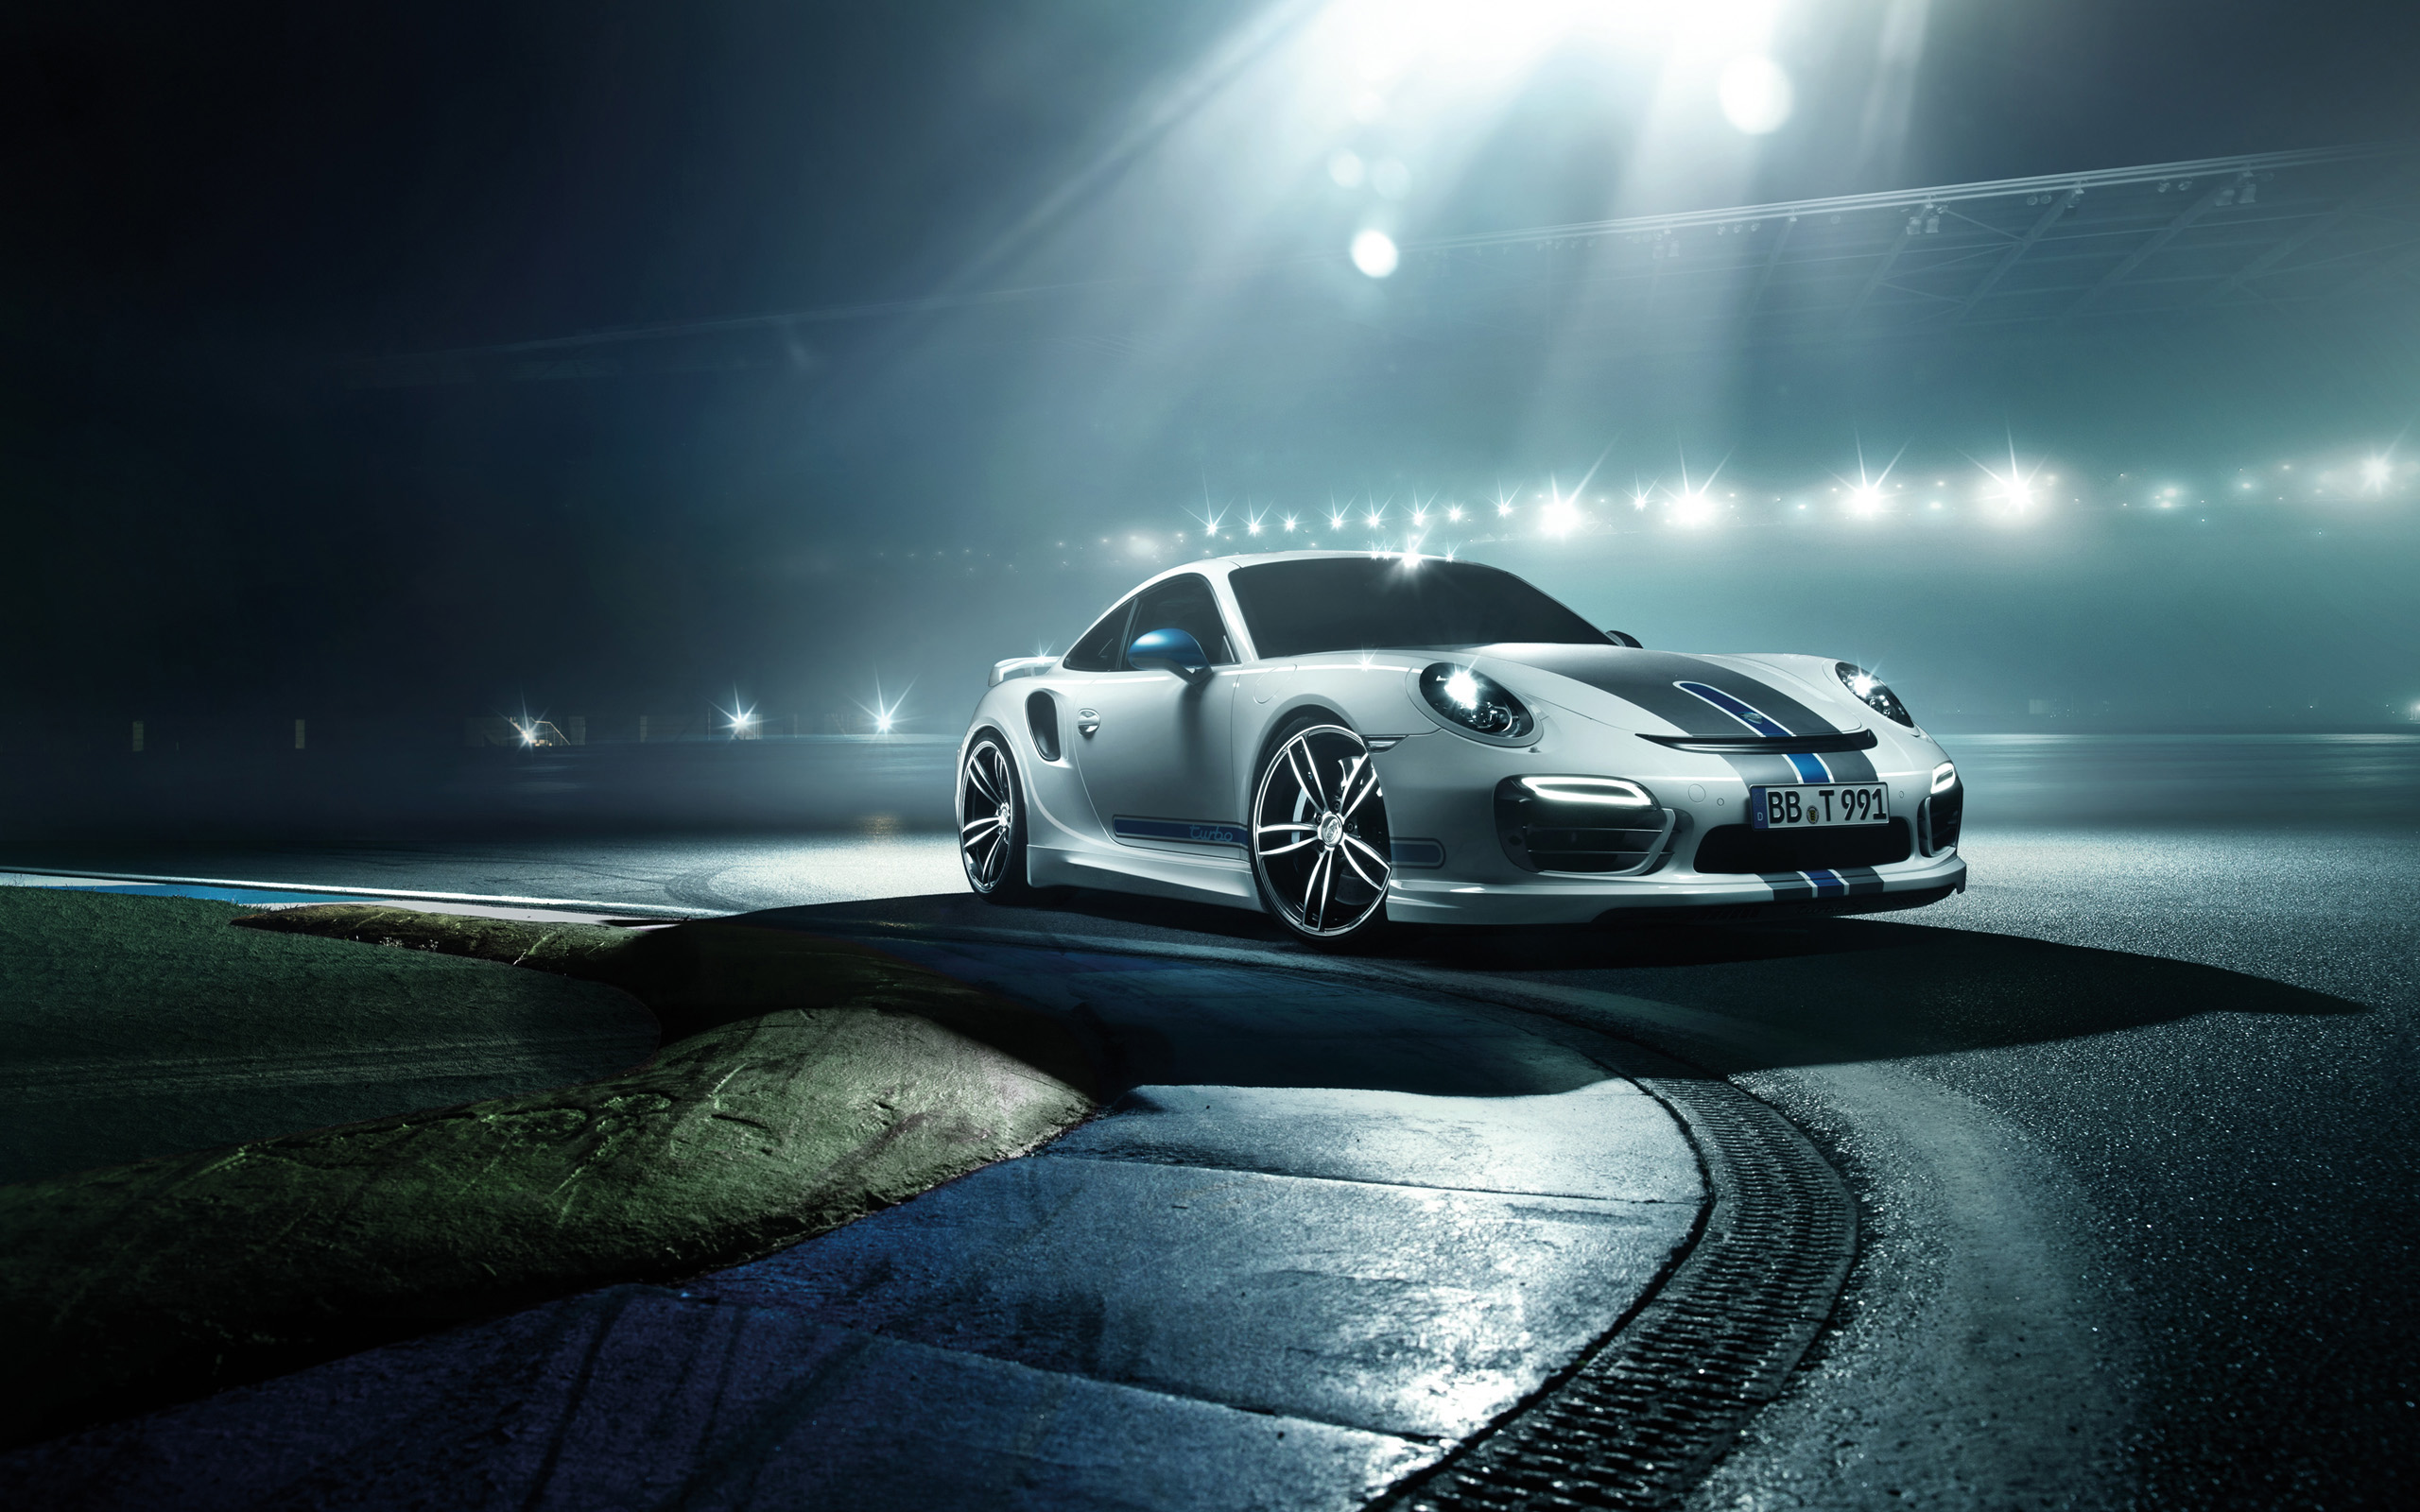 45 Porsche Images For Wallpaper On Wallpapersafari